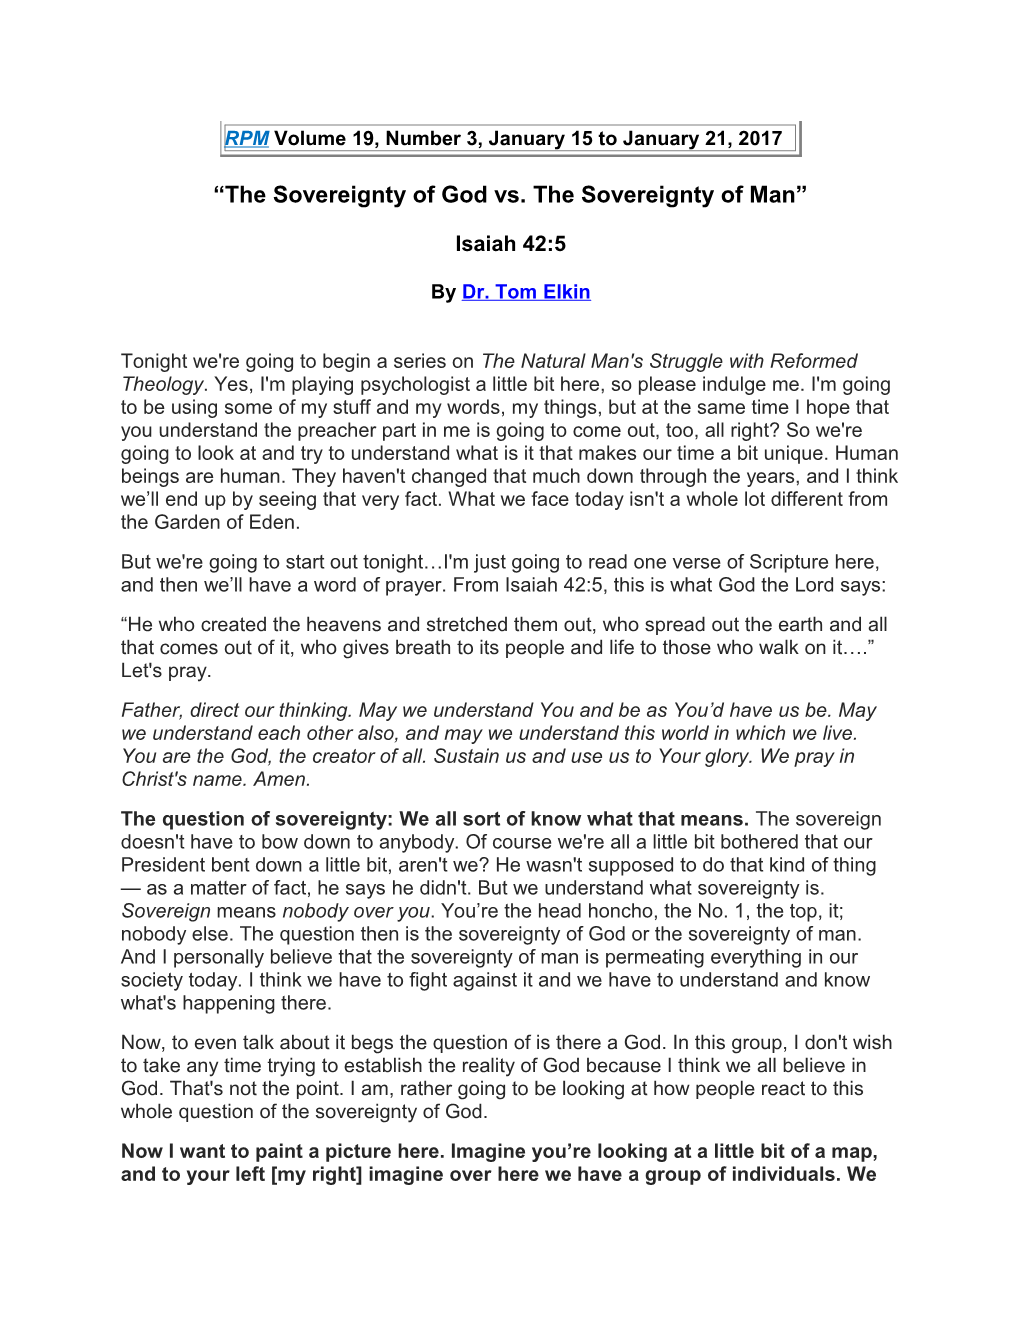 The Sovereignty of God Vs. the Sovereignty of Man